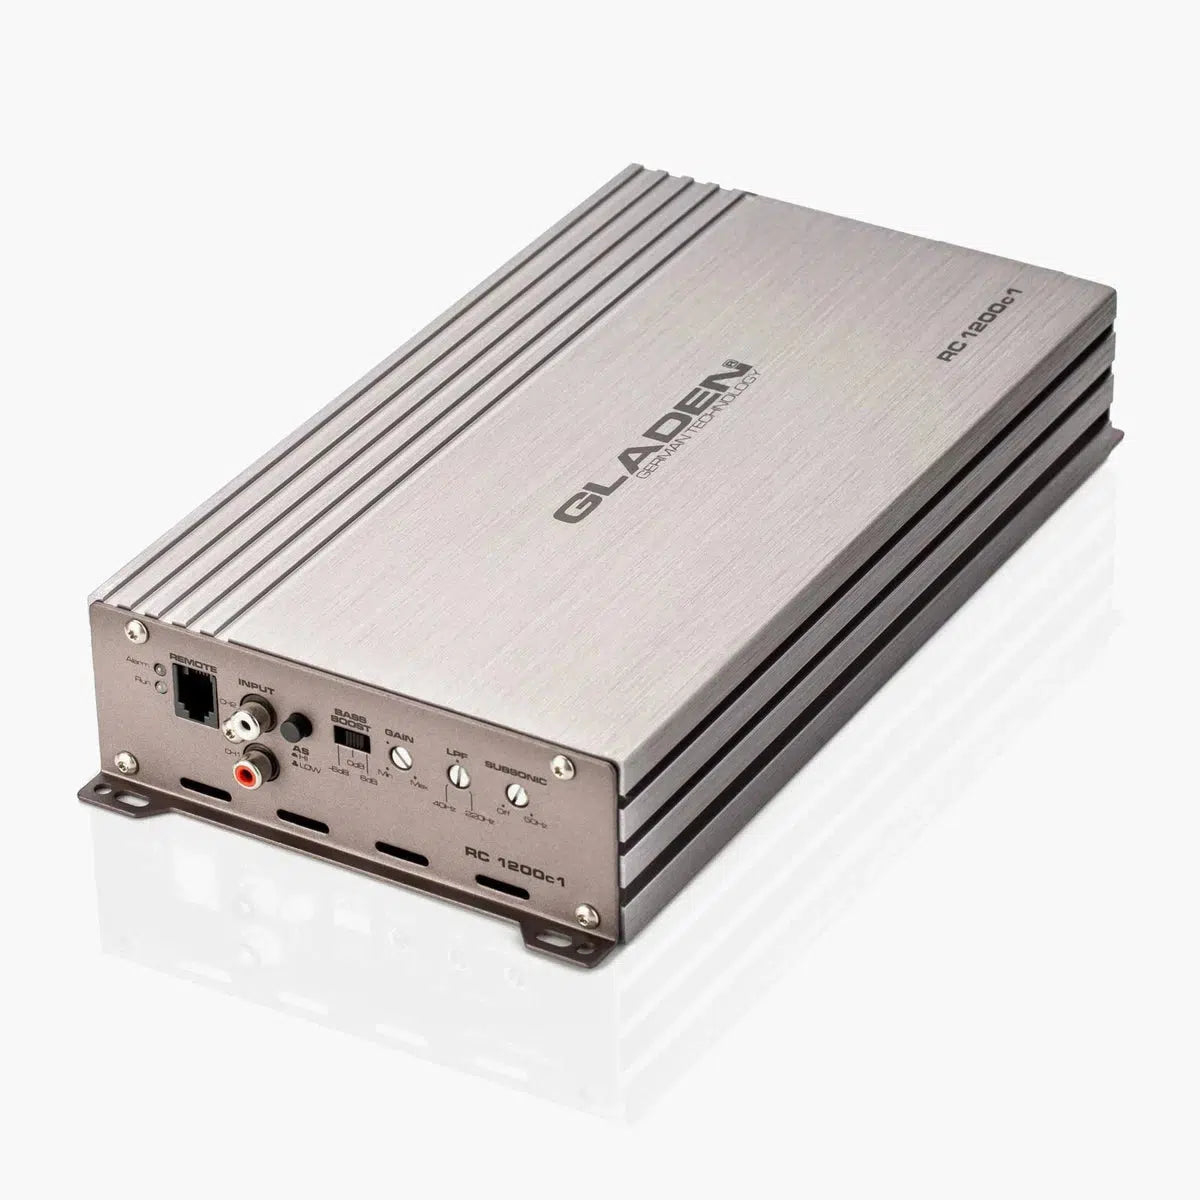 Amplificador de 1 canal Gladen-RC 1200C1-Masori.de